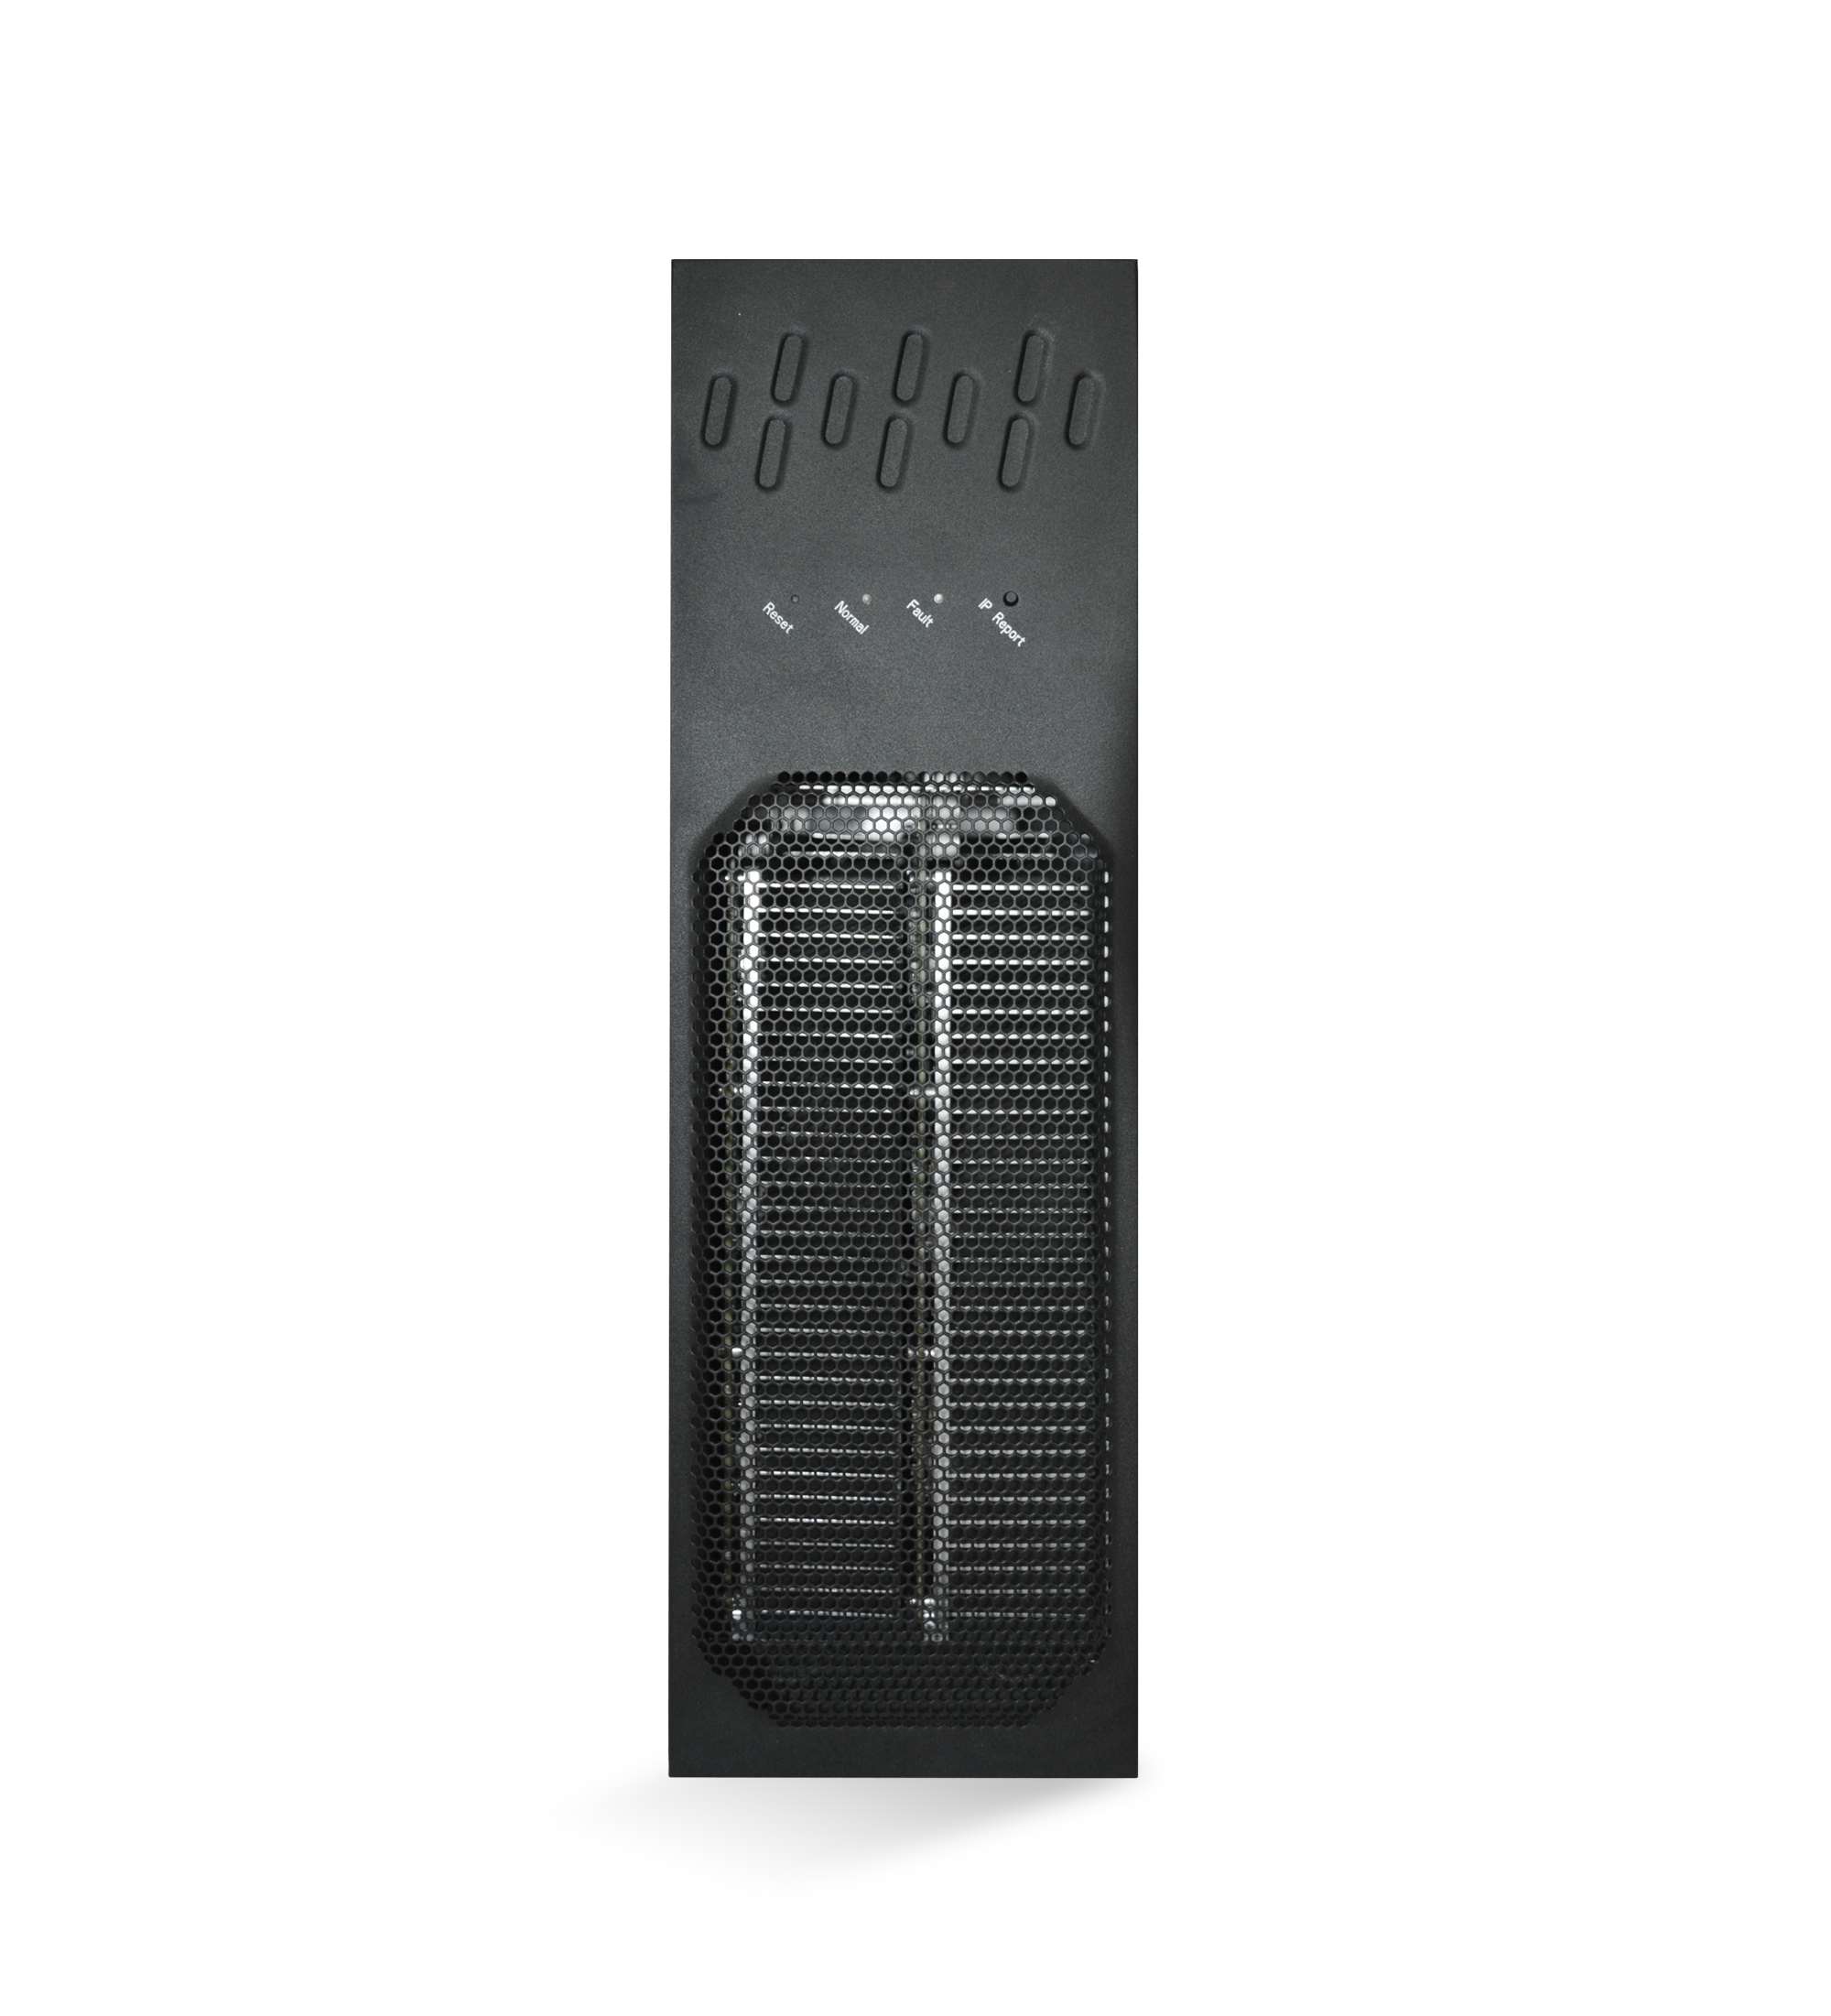 [Official Warranty] Quasi New_JASMINER X4-Q High throughput 3U quiet server （1040MH/370W）